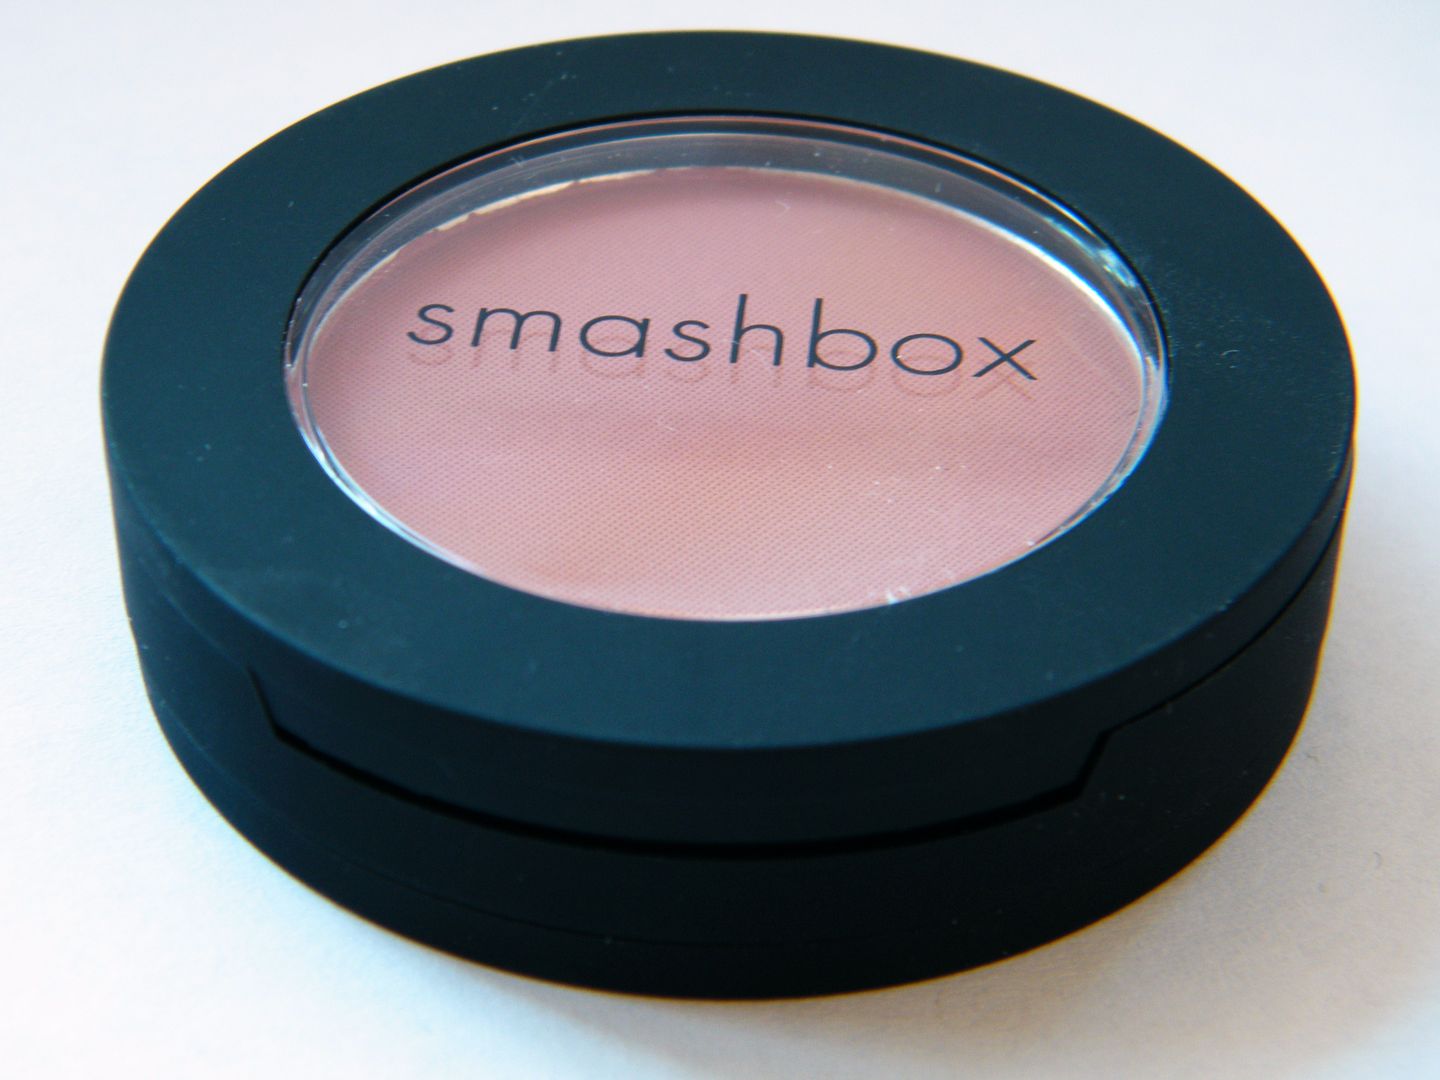 Smashbox Girls On Film Blush Rush in Silhouette